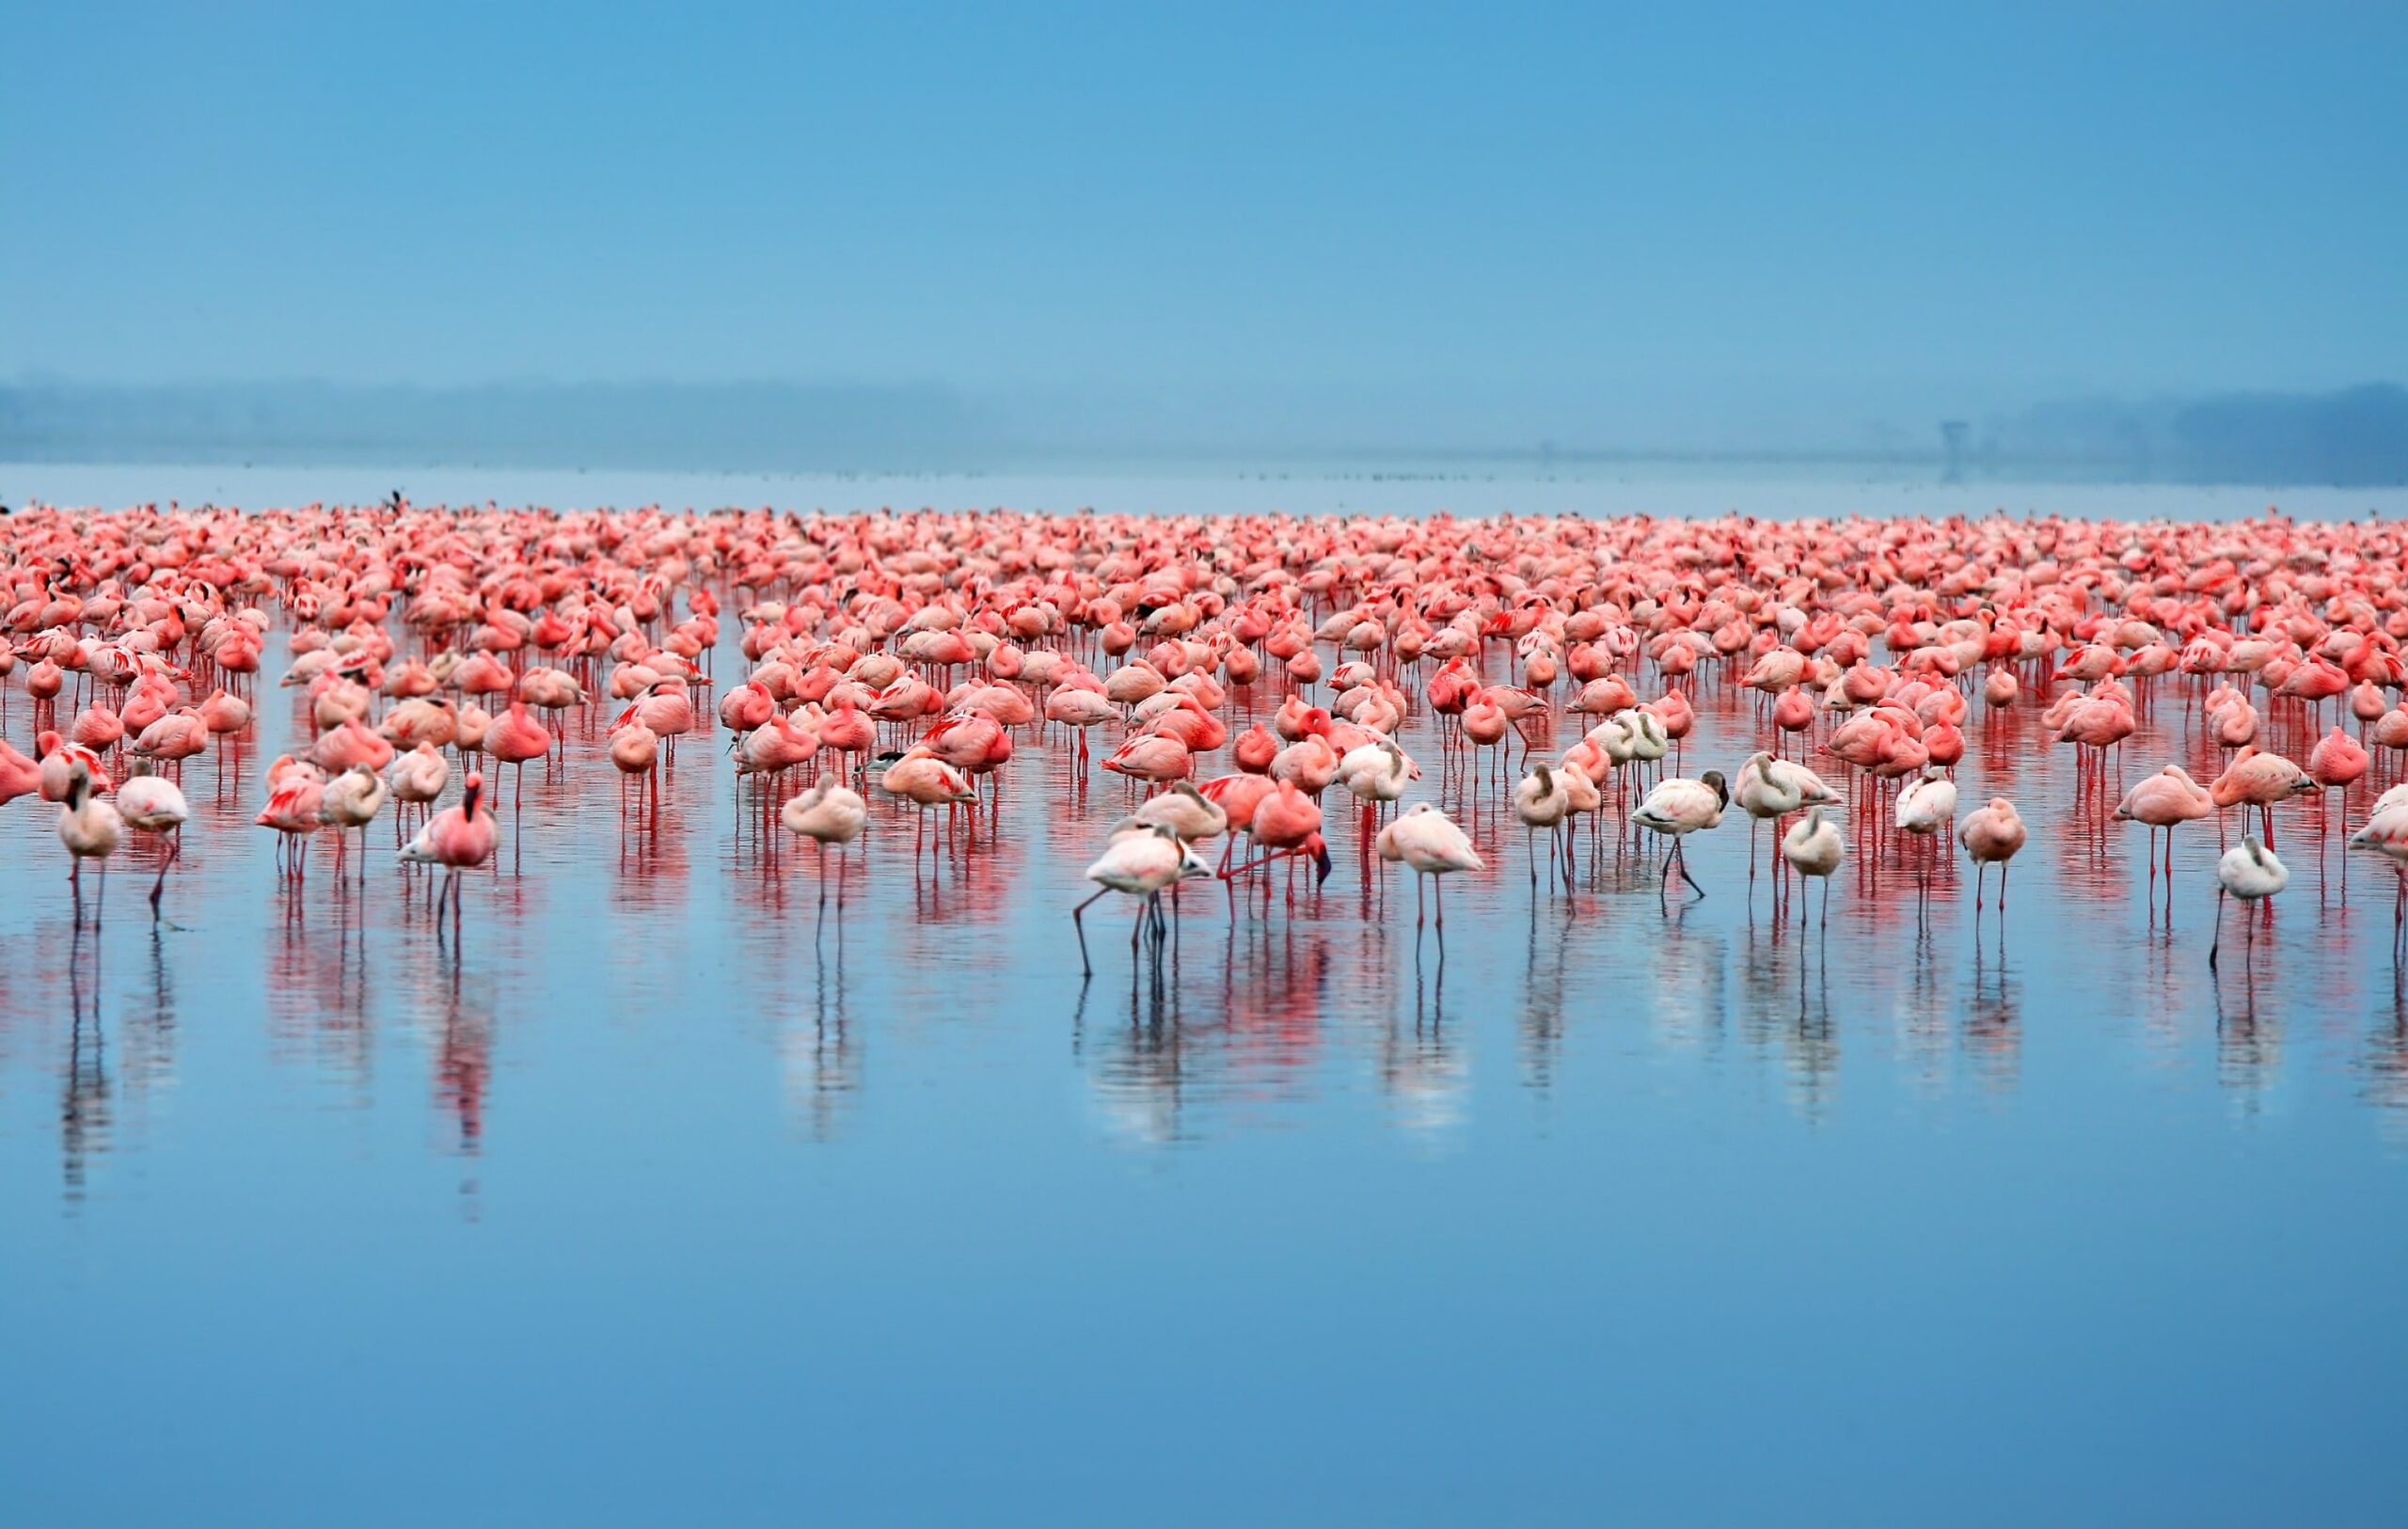 flocks-of-flamingo-2021-08-26-18-27-06-utc-min